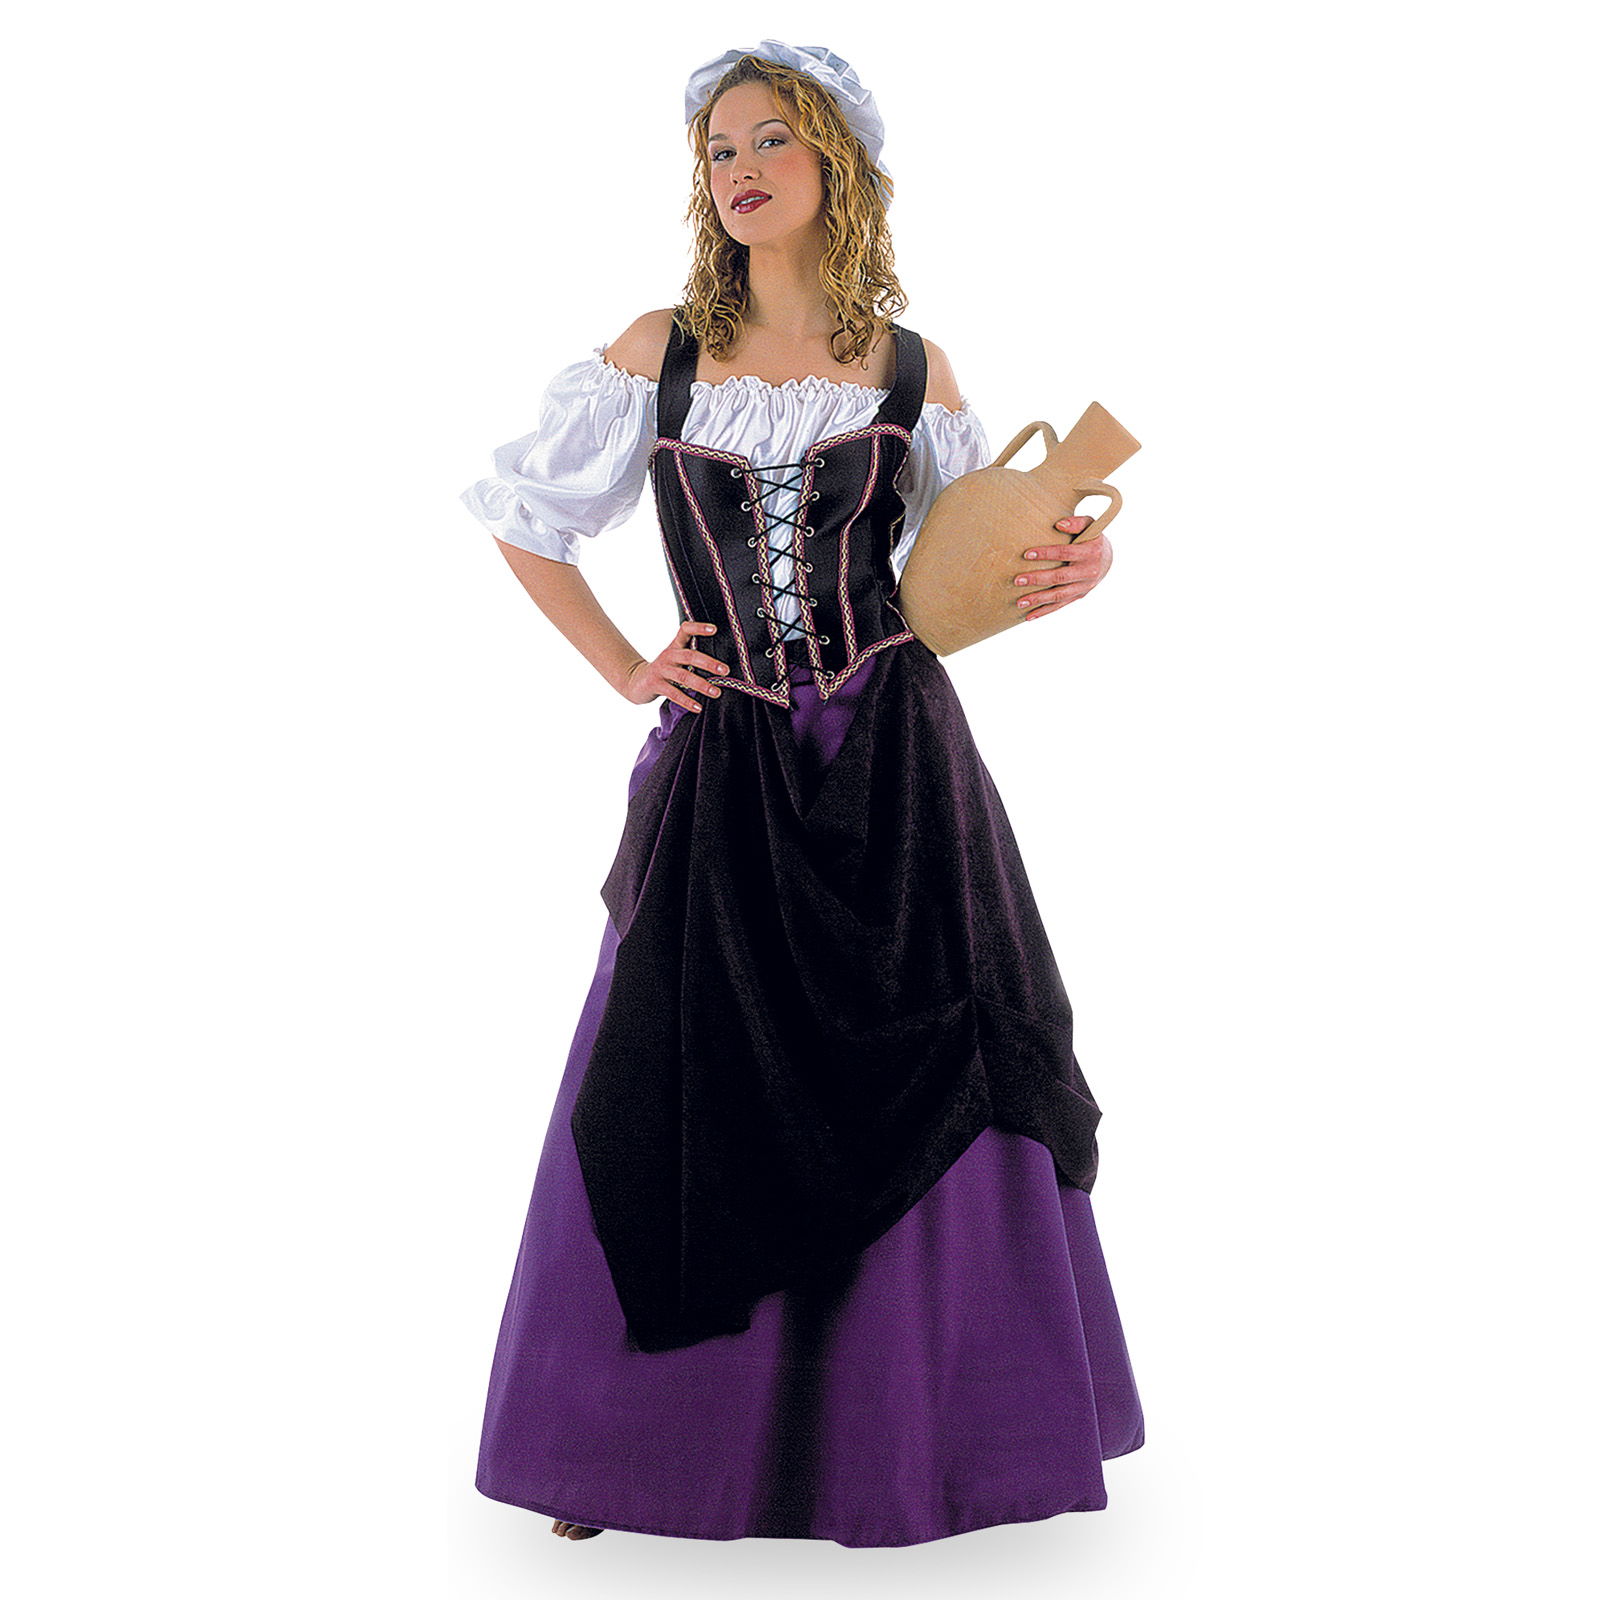 Innkeeper - Medieval Costume